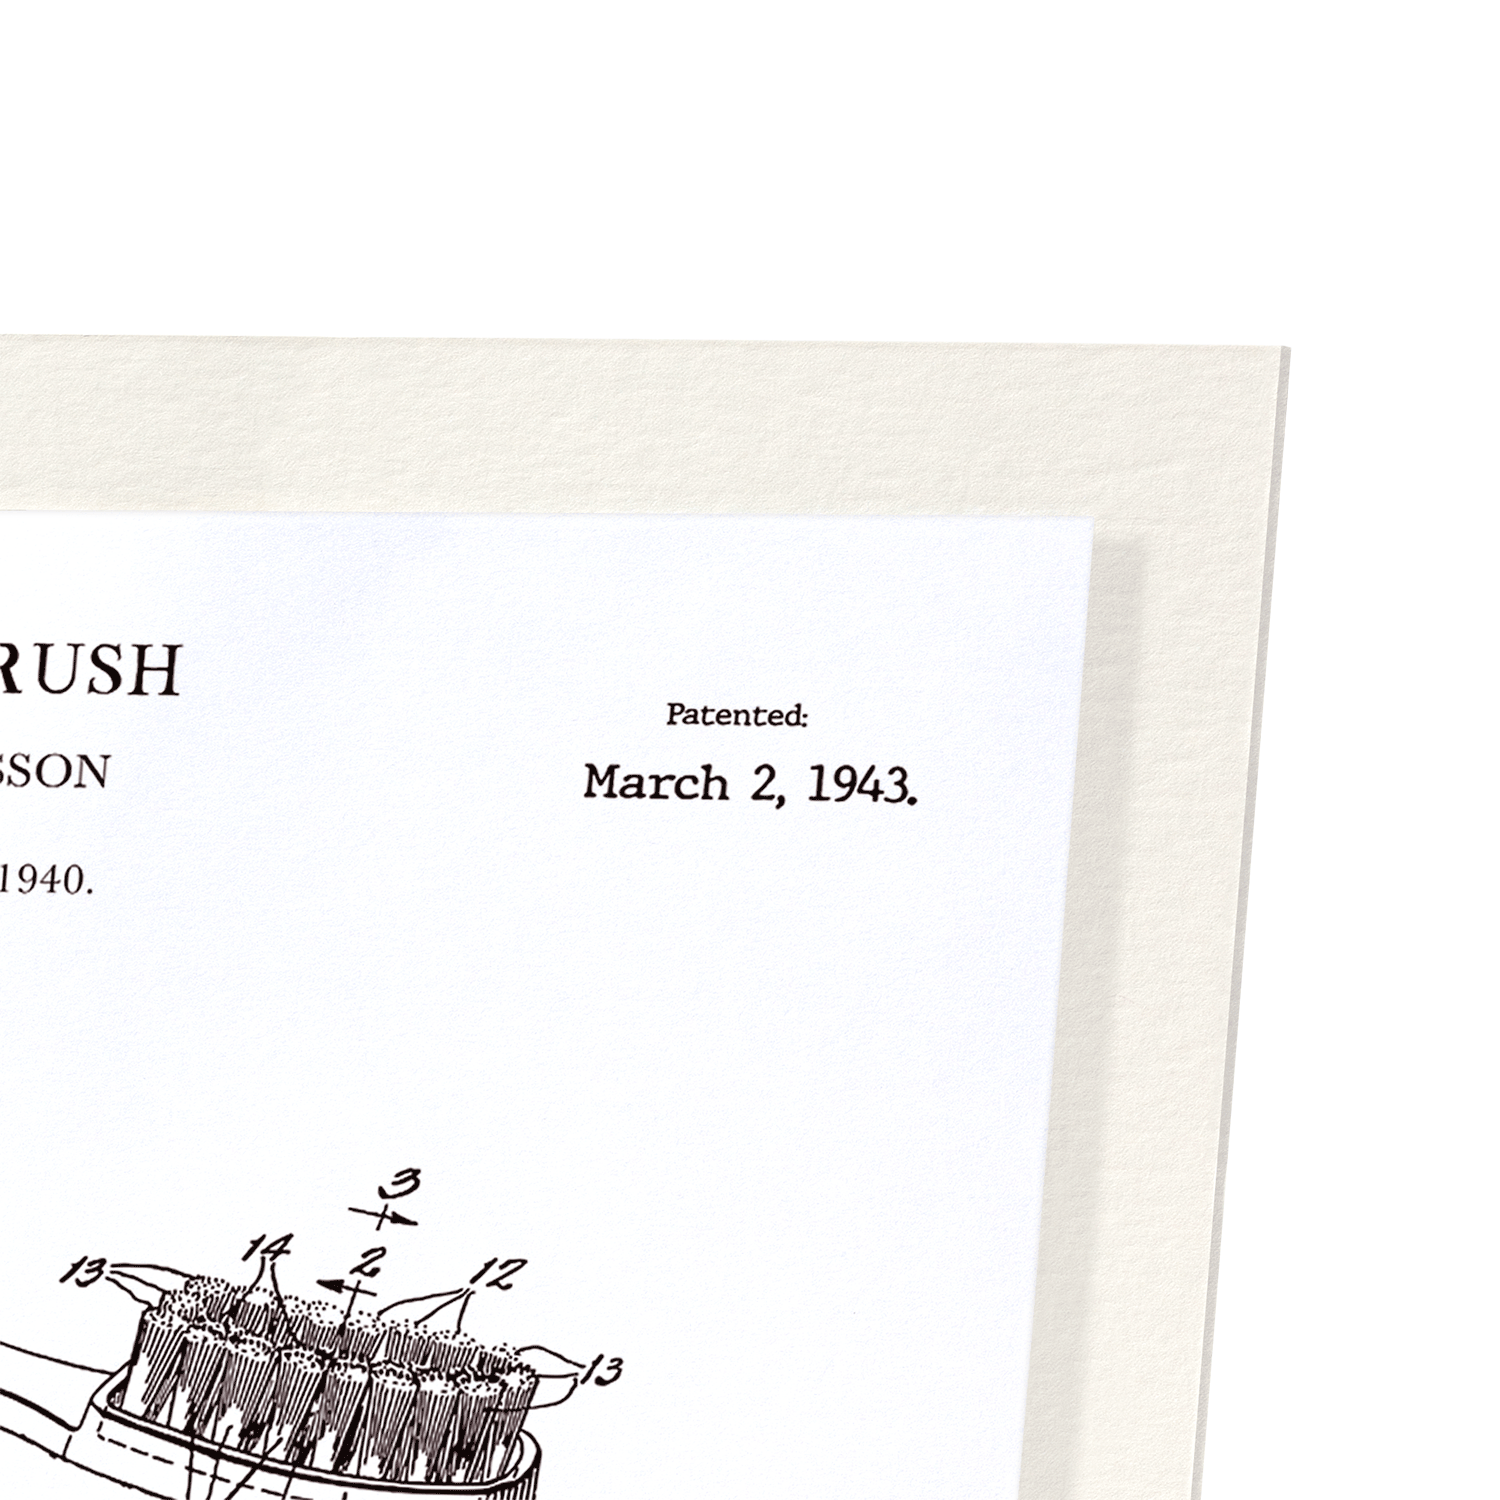 PATENT OF TOOTHBRUSH (1943): Patent Art Print